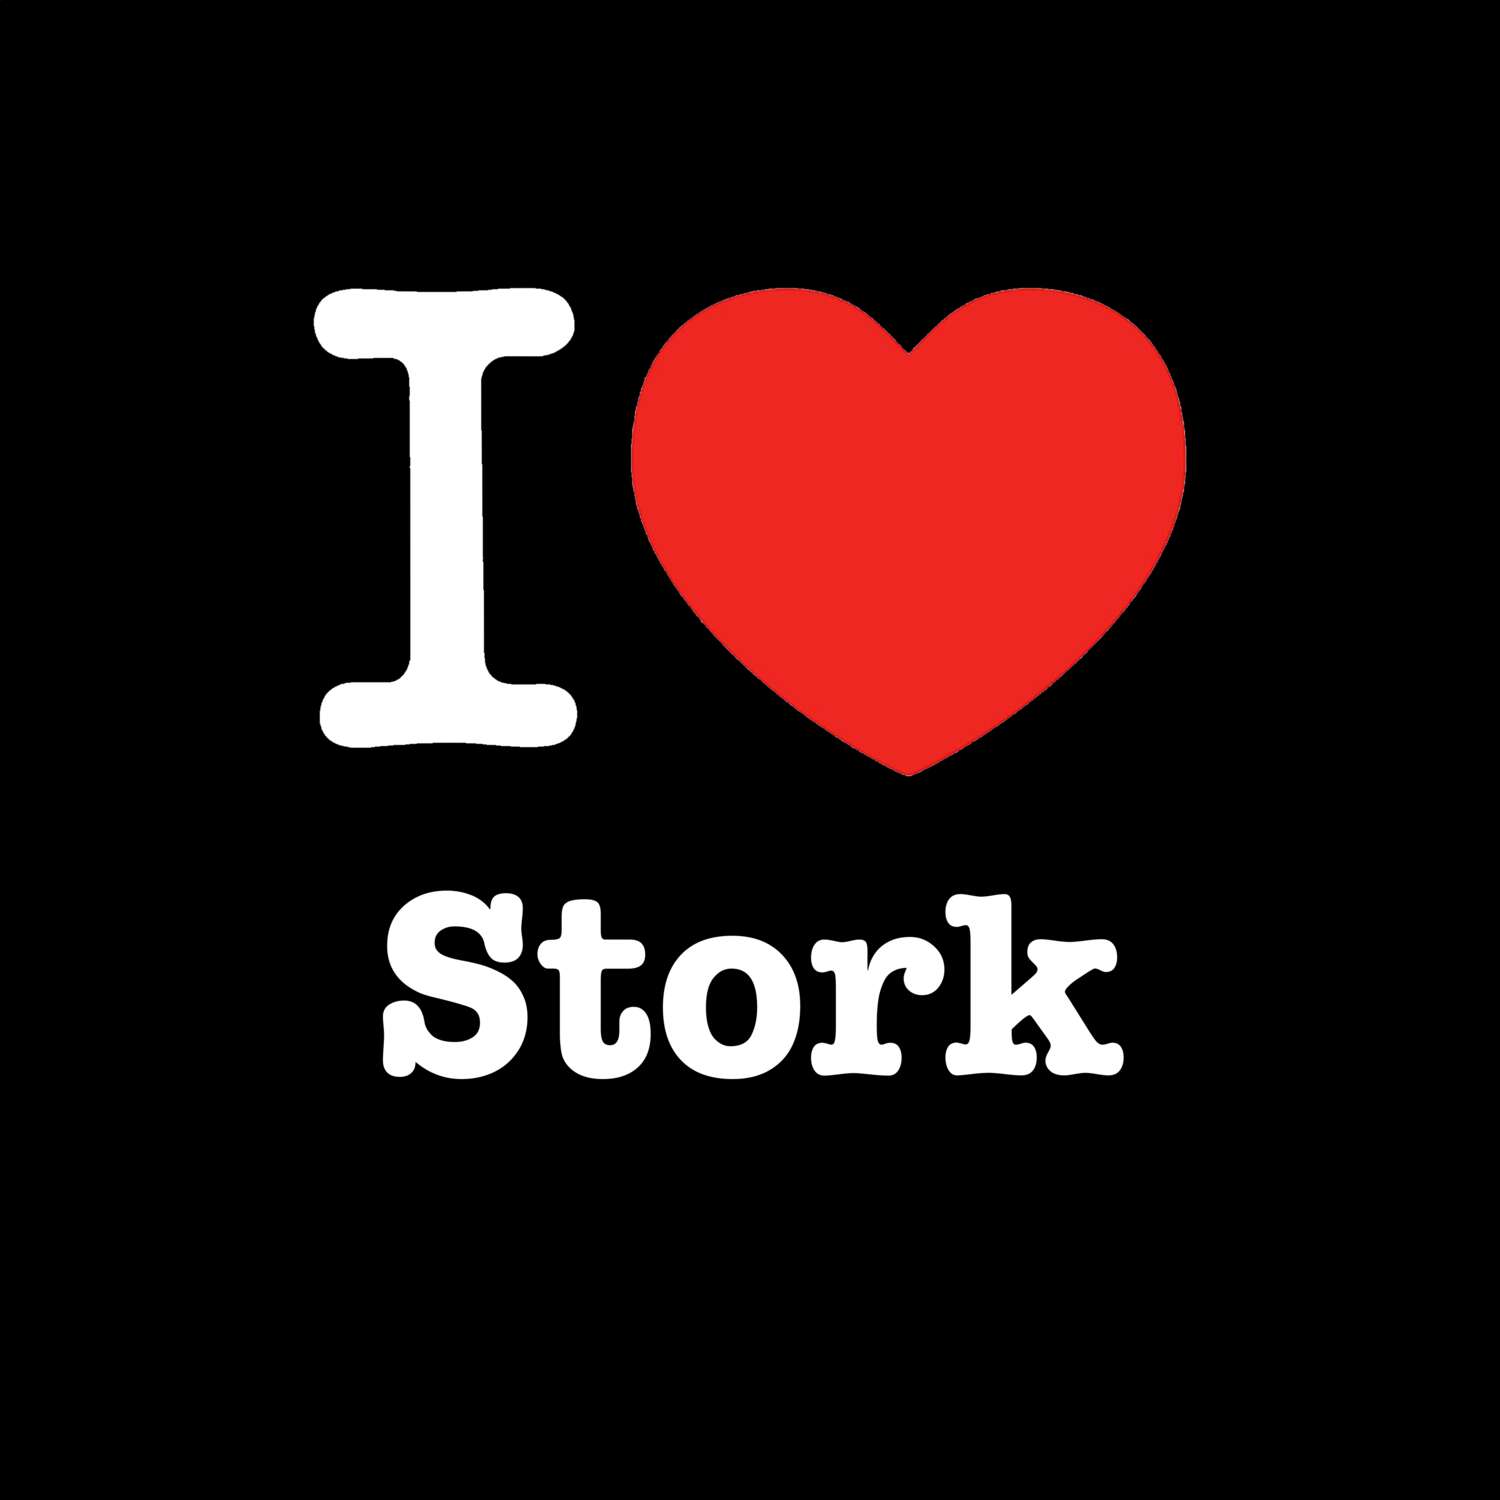 Stork T-Shirt »I love«